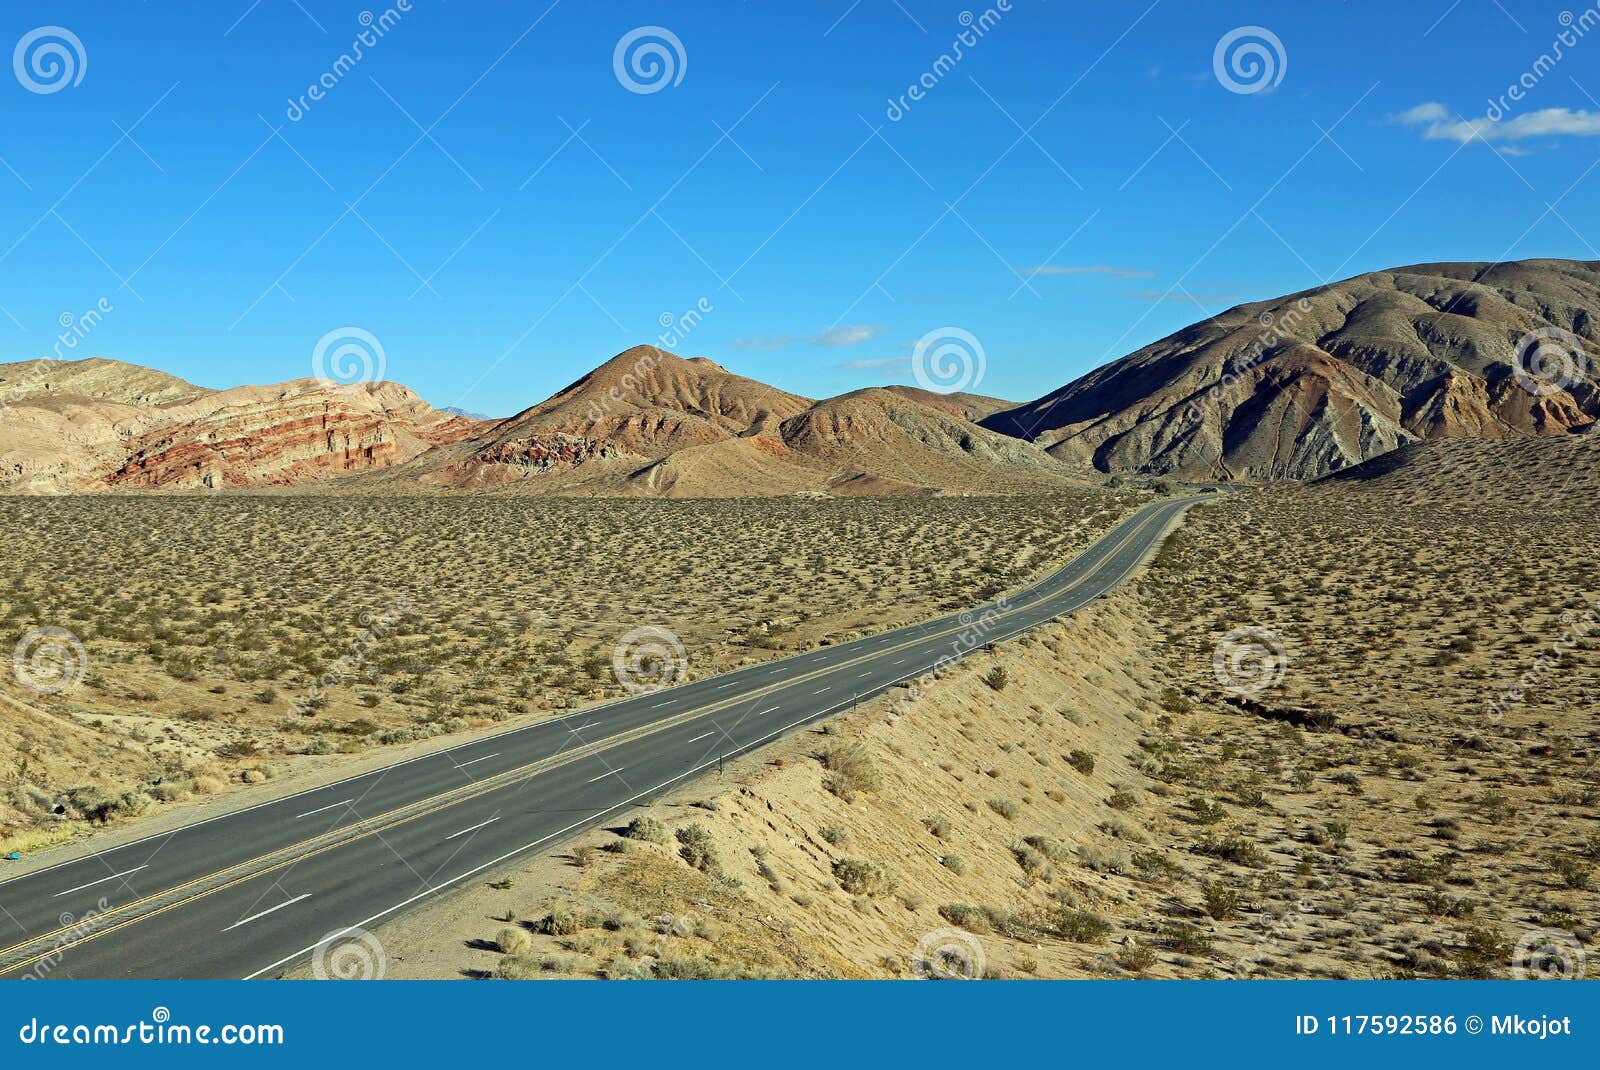 El Paso Mountains stock photo. Image of landscape, road - 117592586